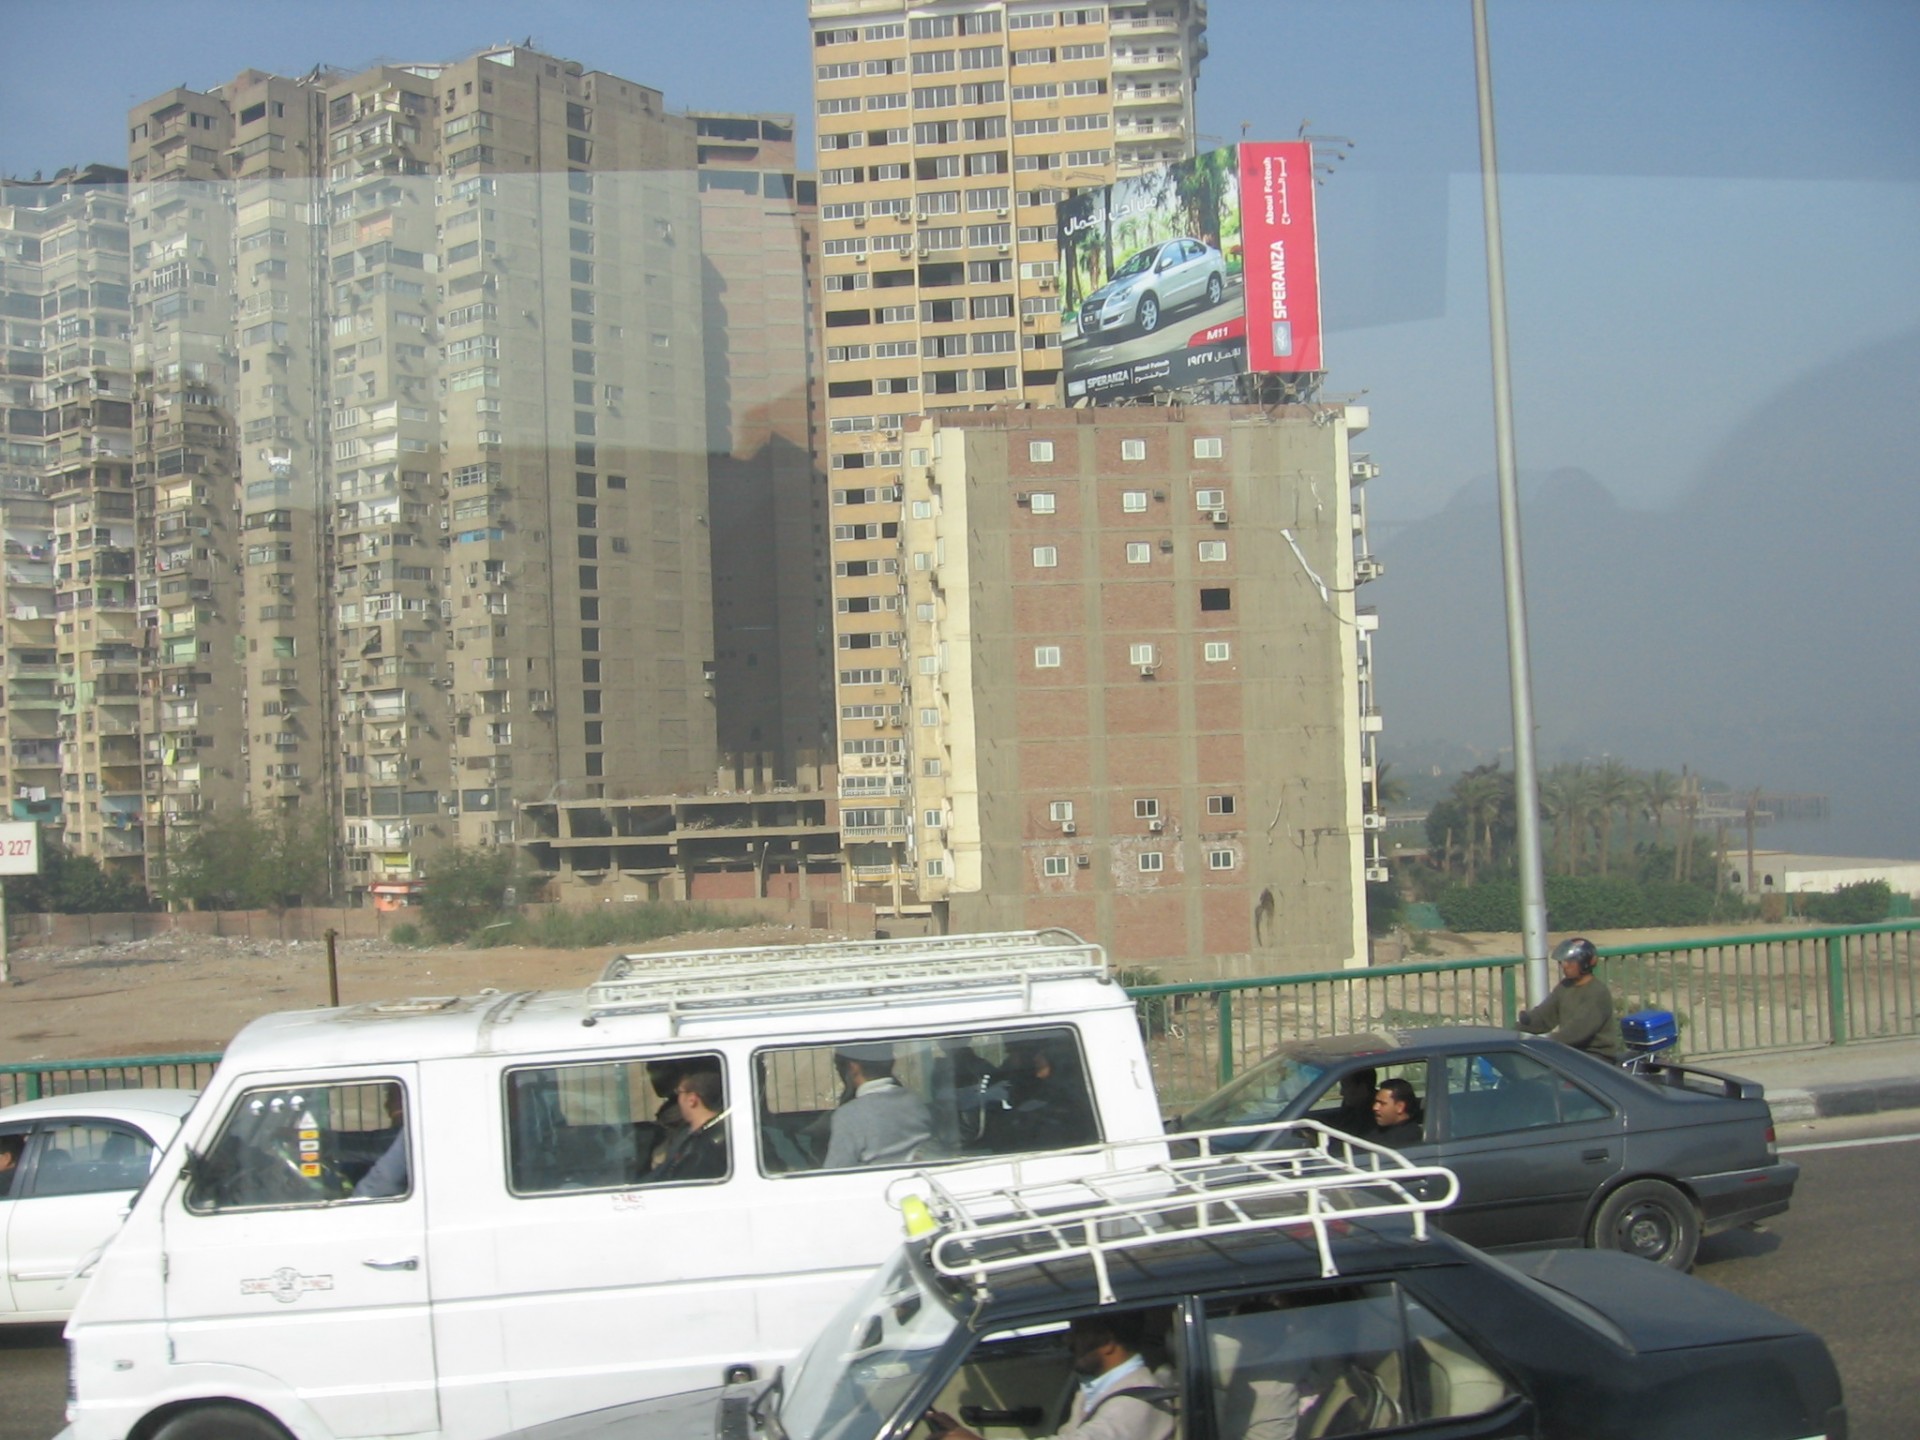 Cairo Housing Estate